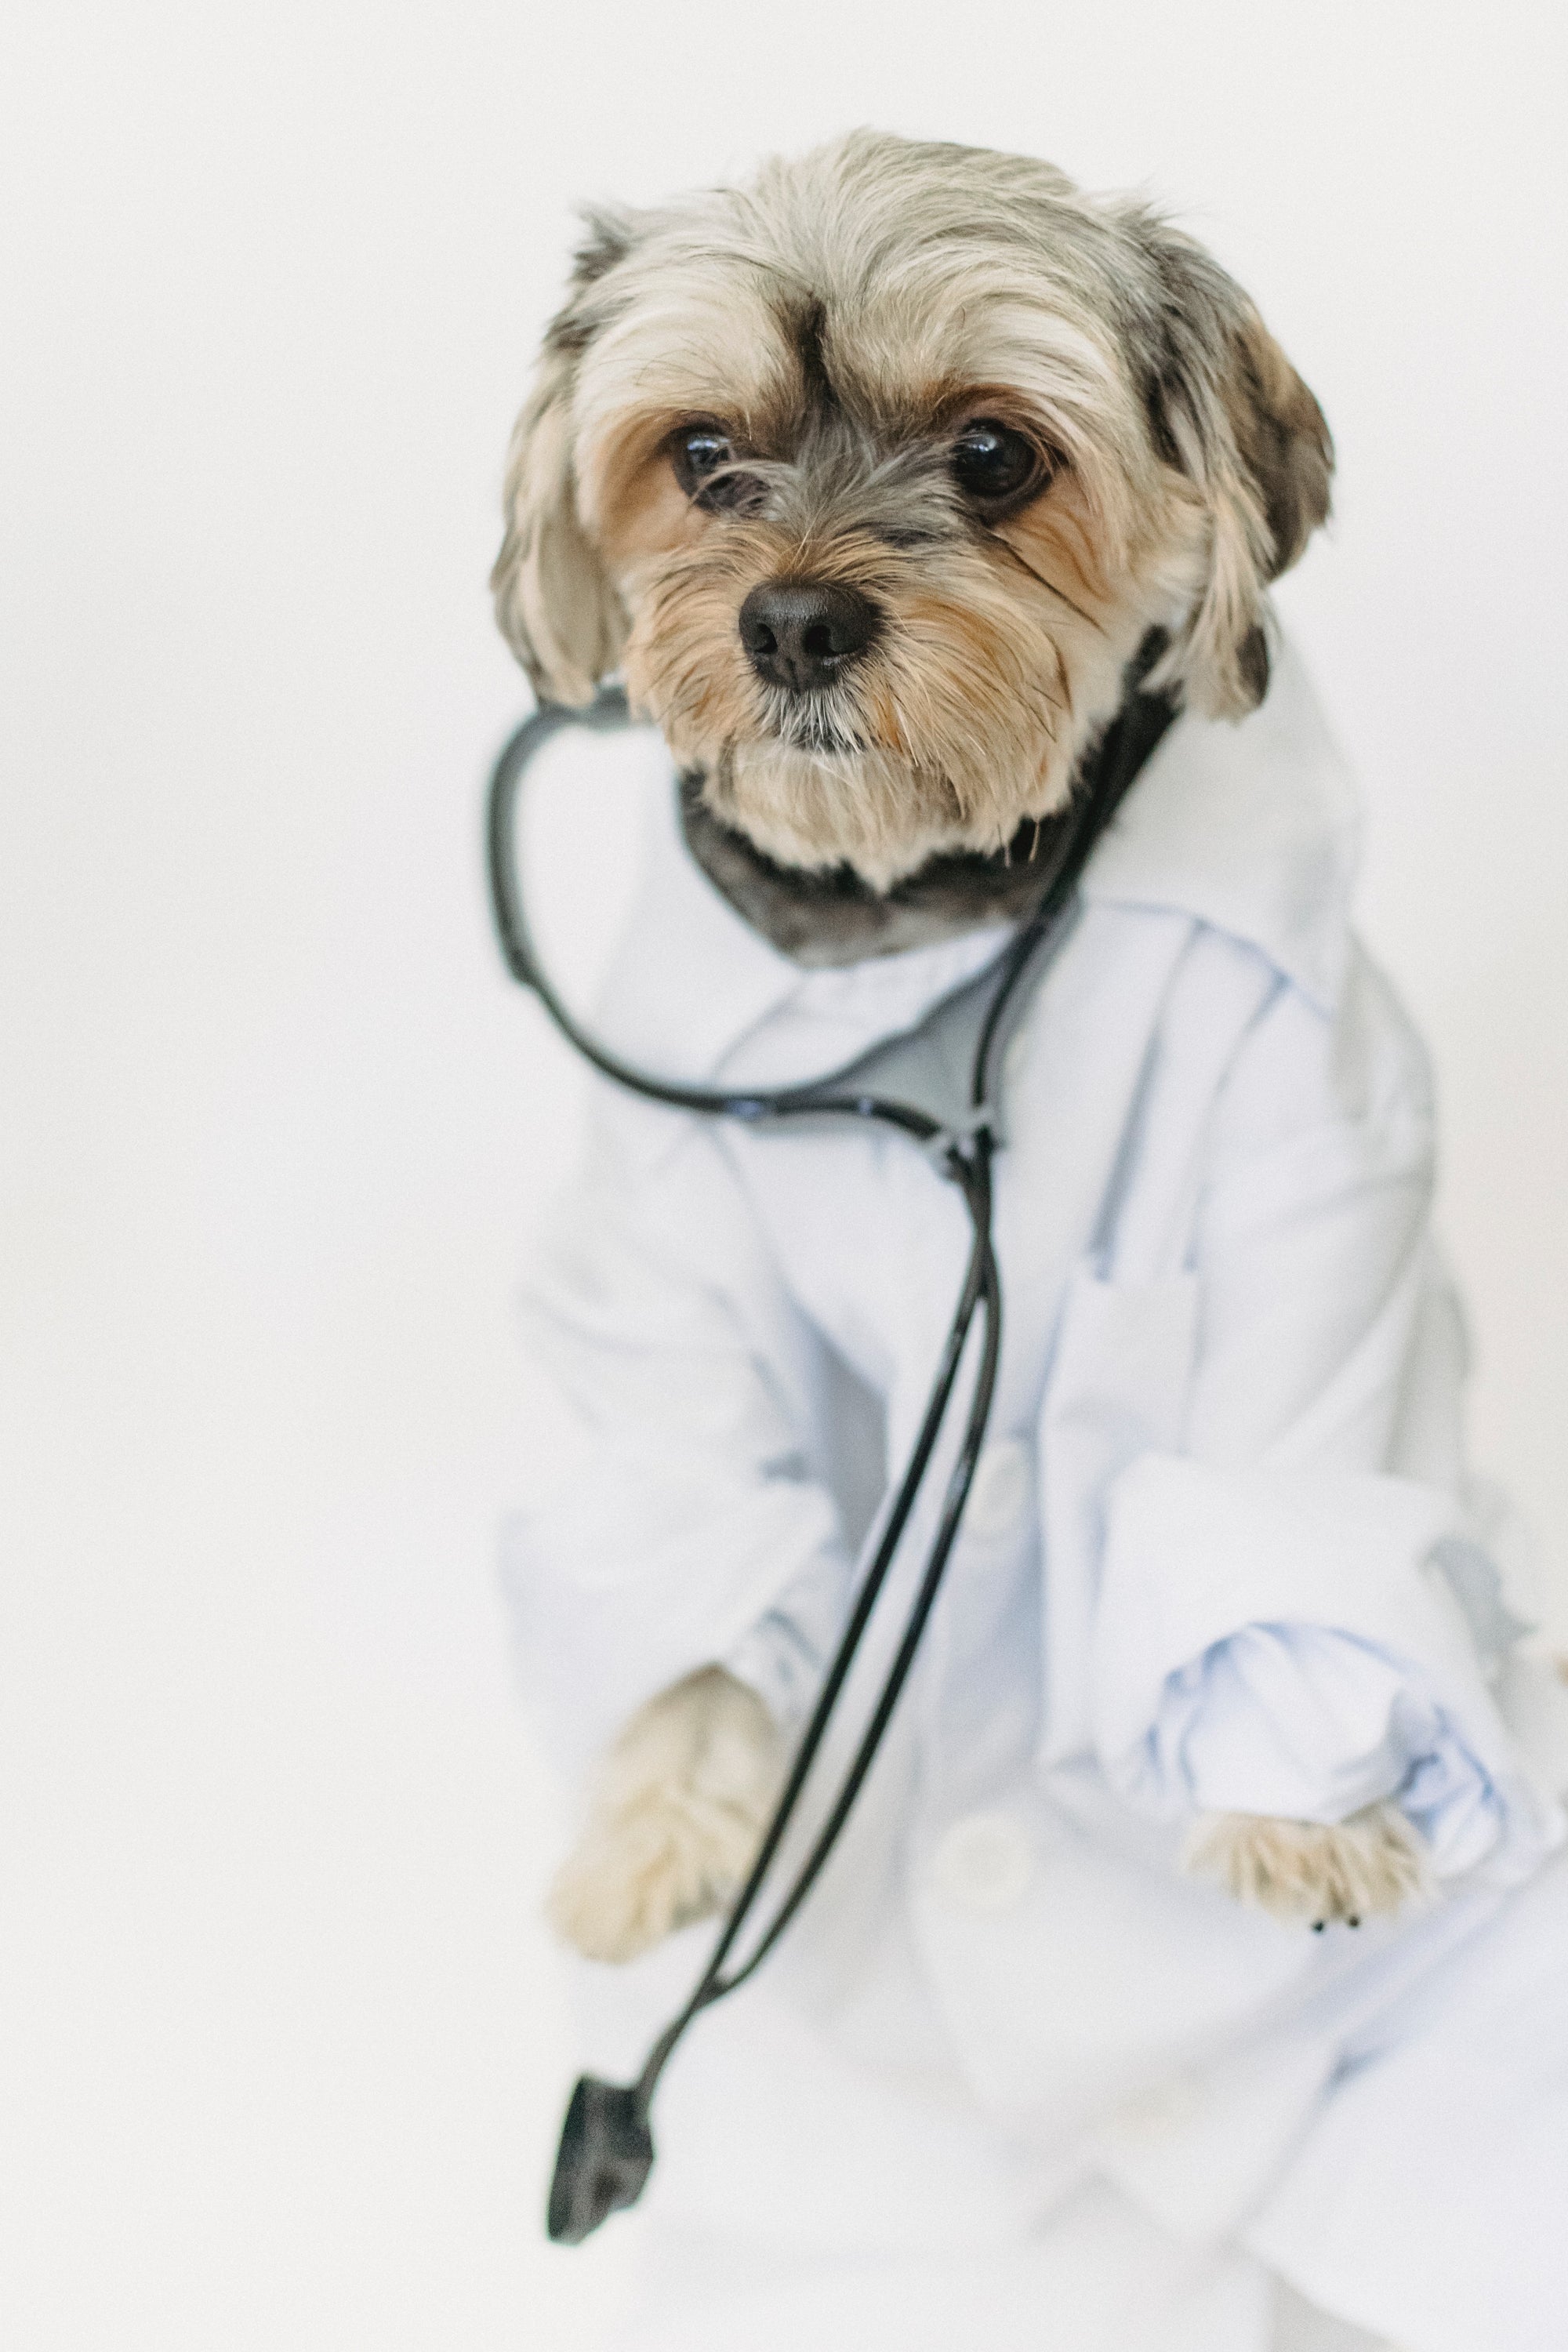 Little dog in a doctor coat wearing a stethoscope